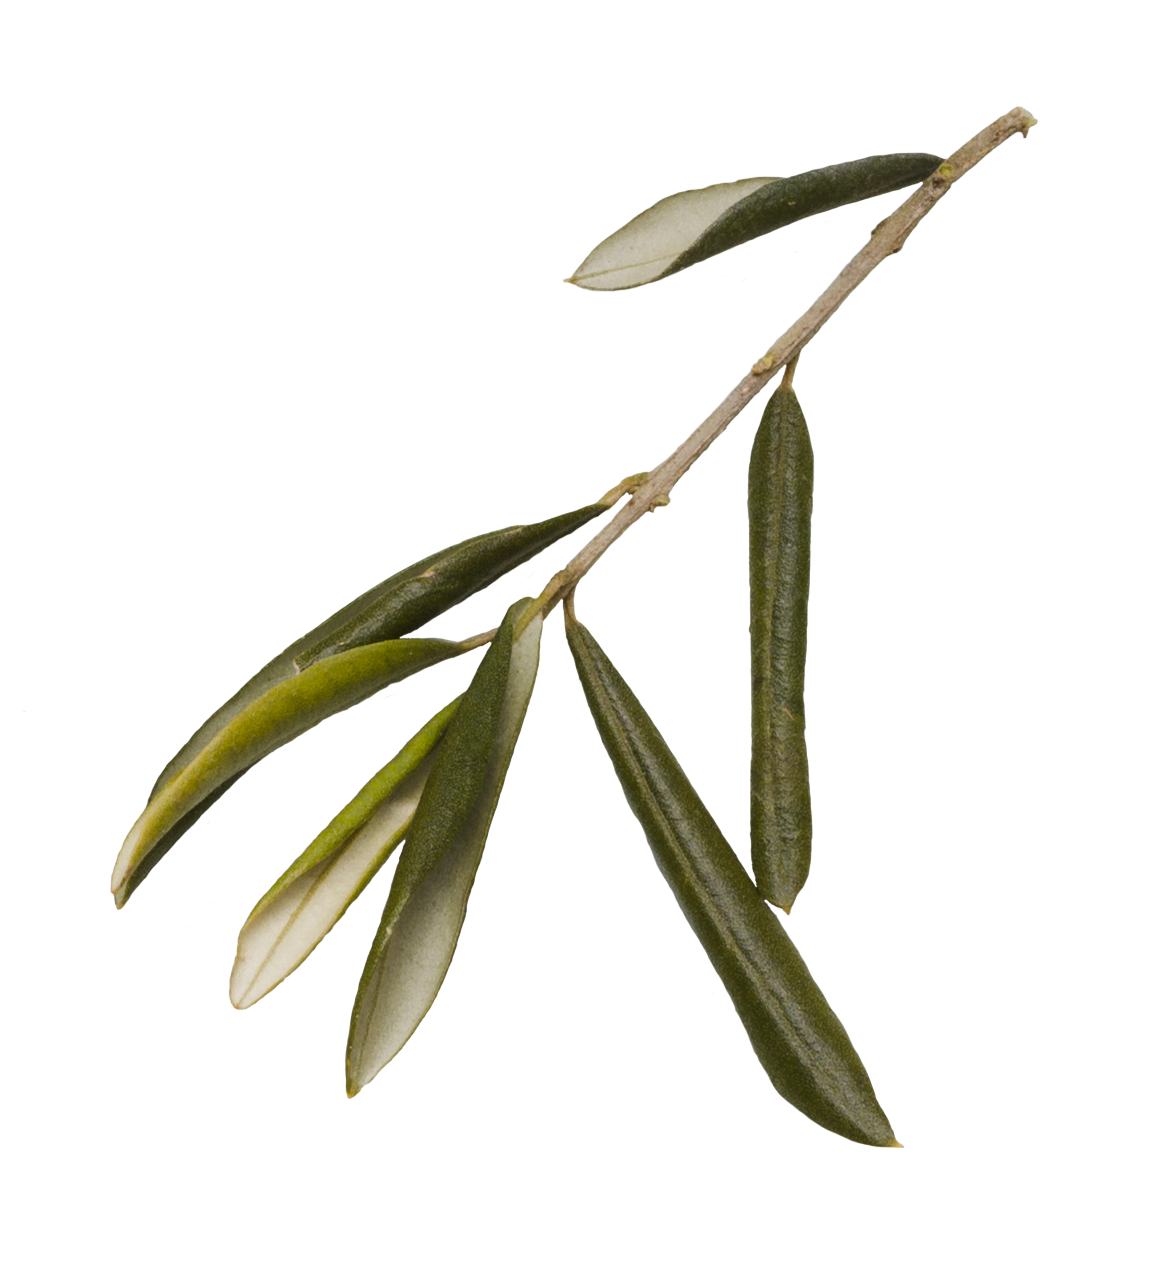 Rama de olivo